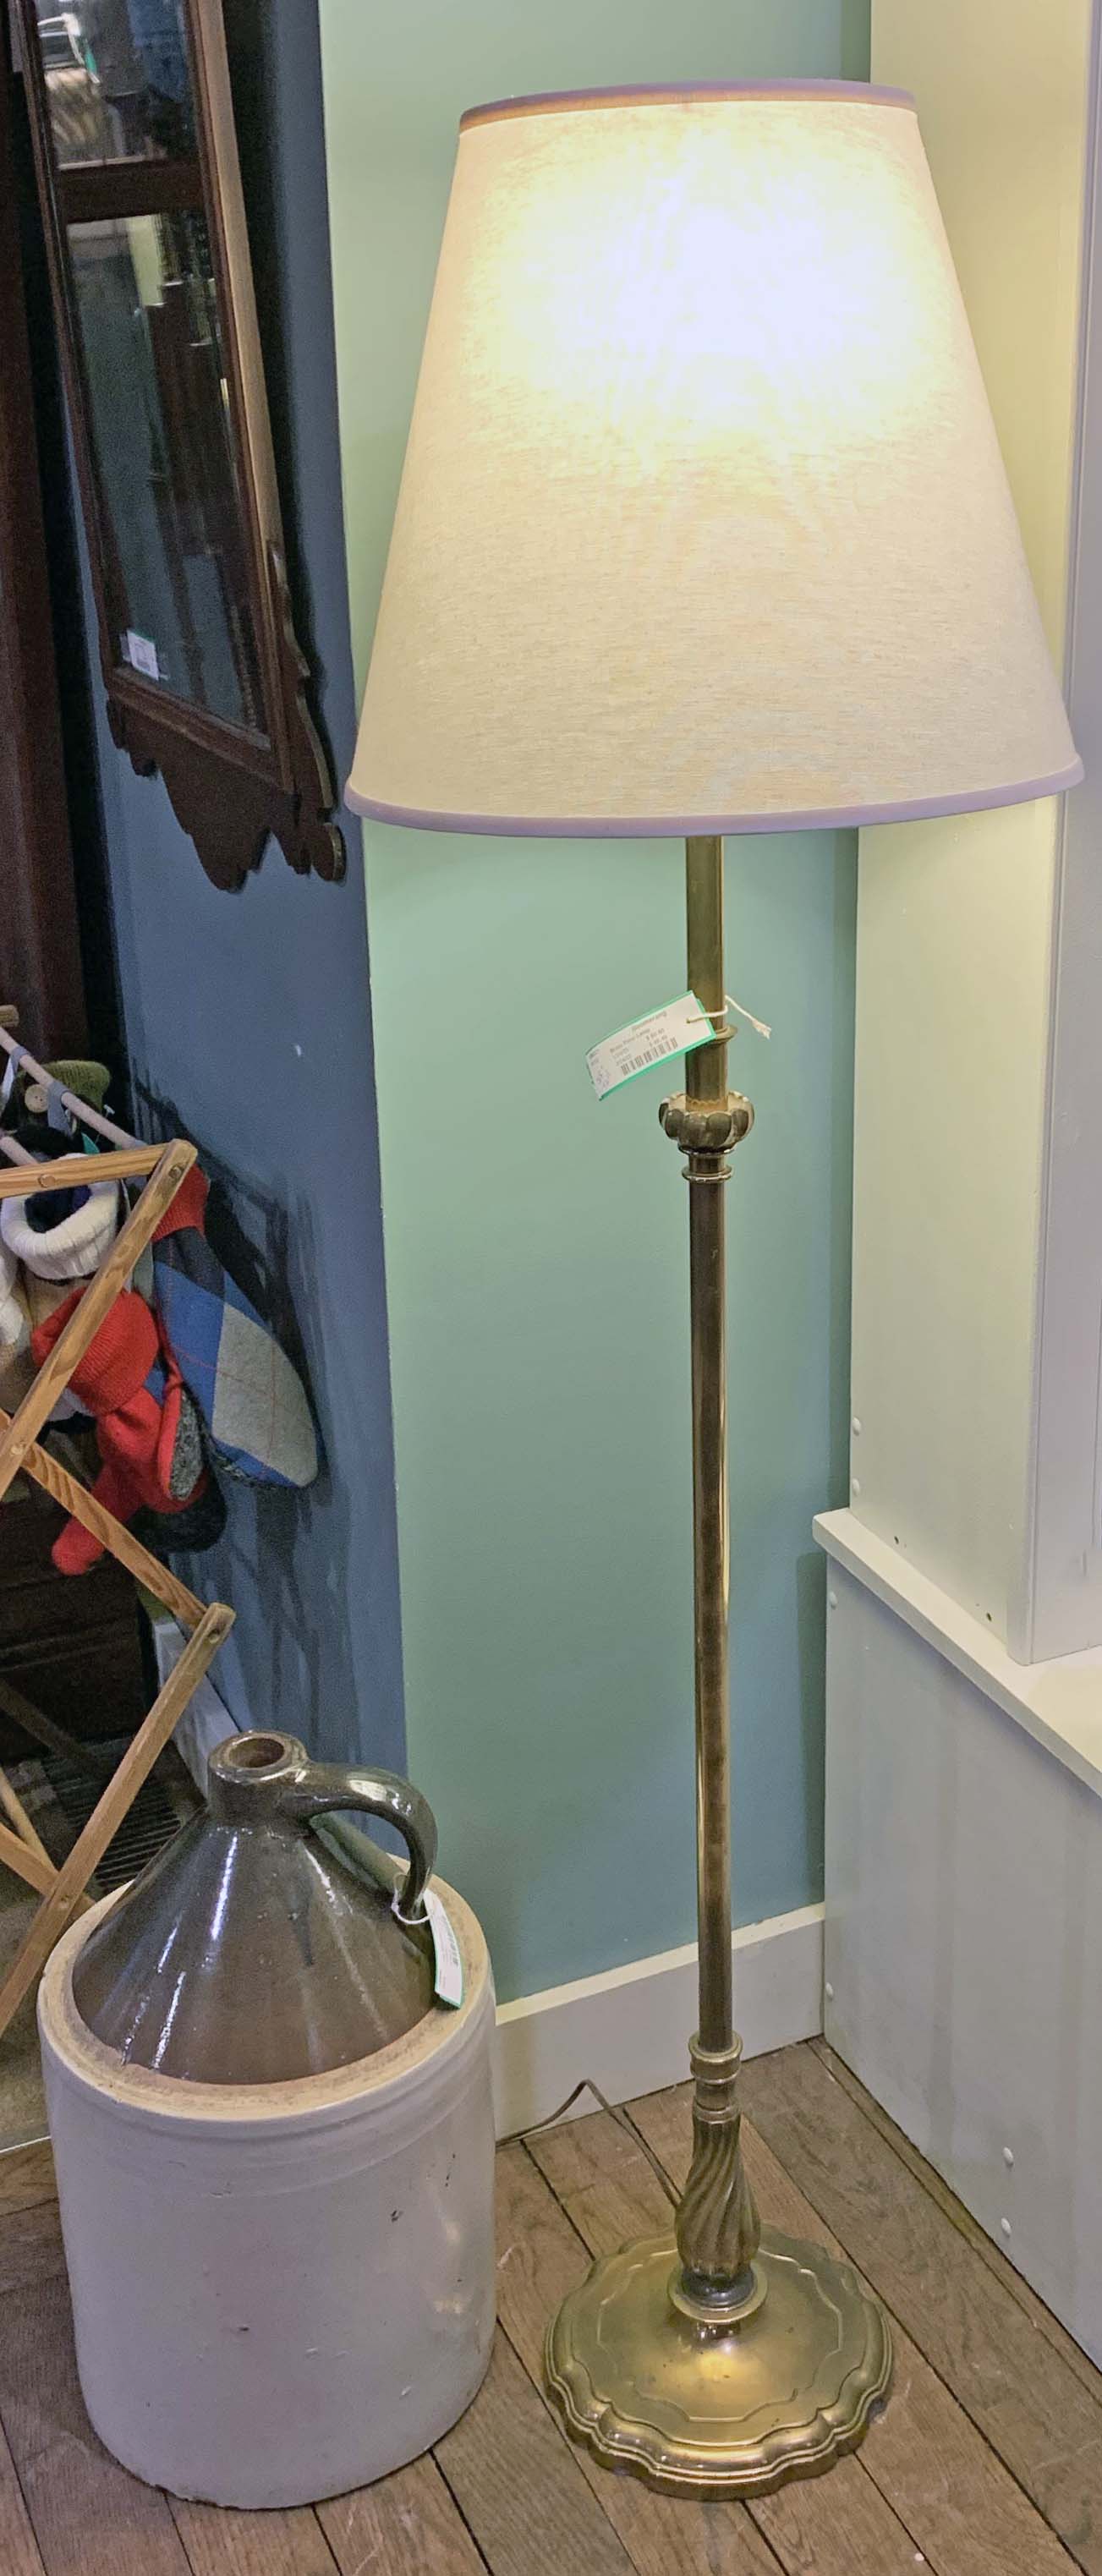 Brass Floor Lamp - $50.50.
58 In Tall.